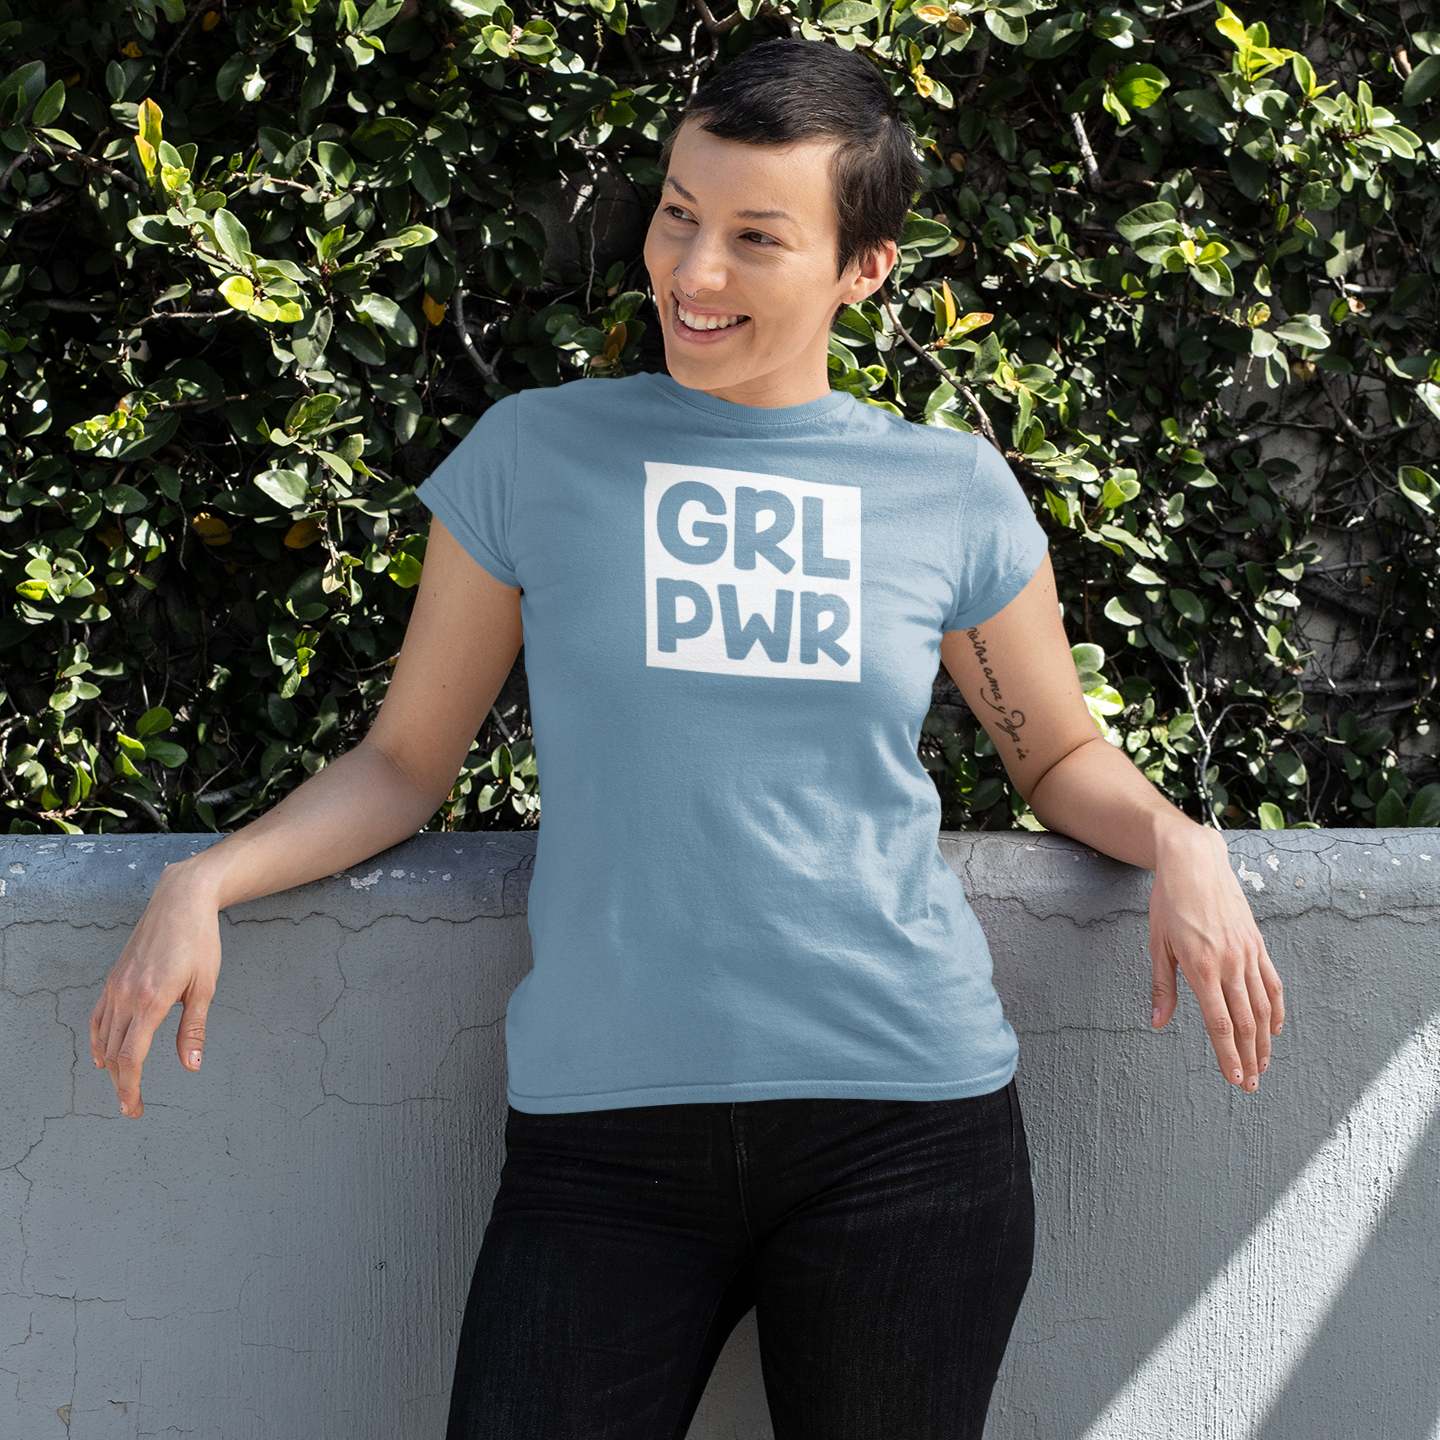 'GRL PWR' adult shirt